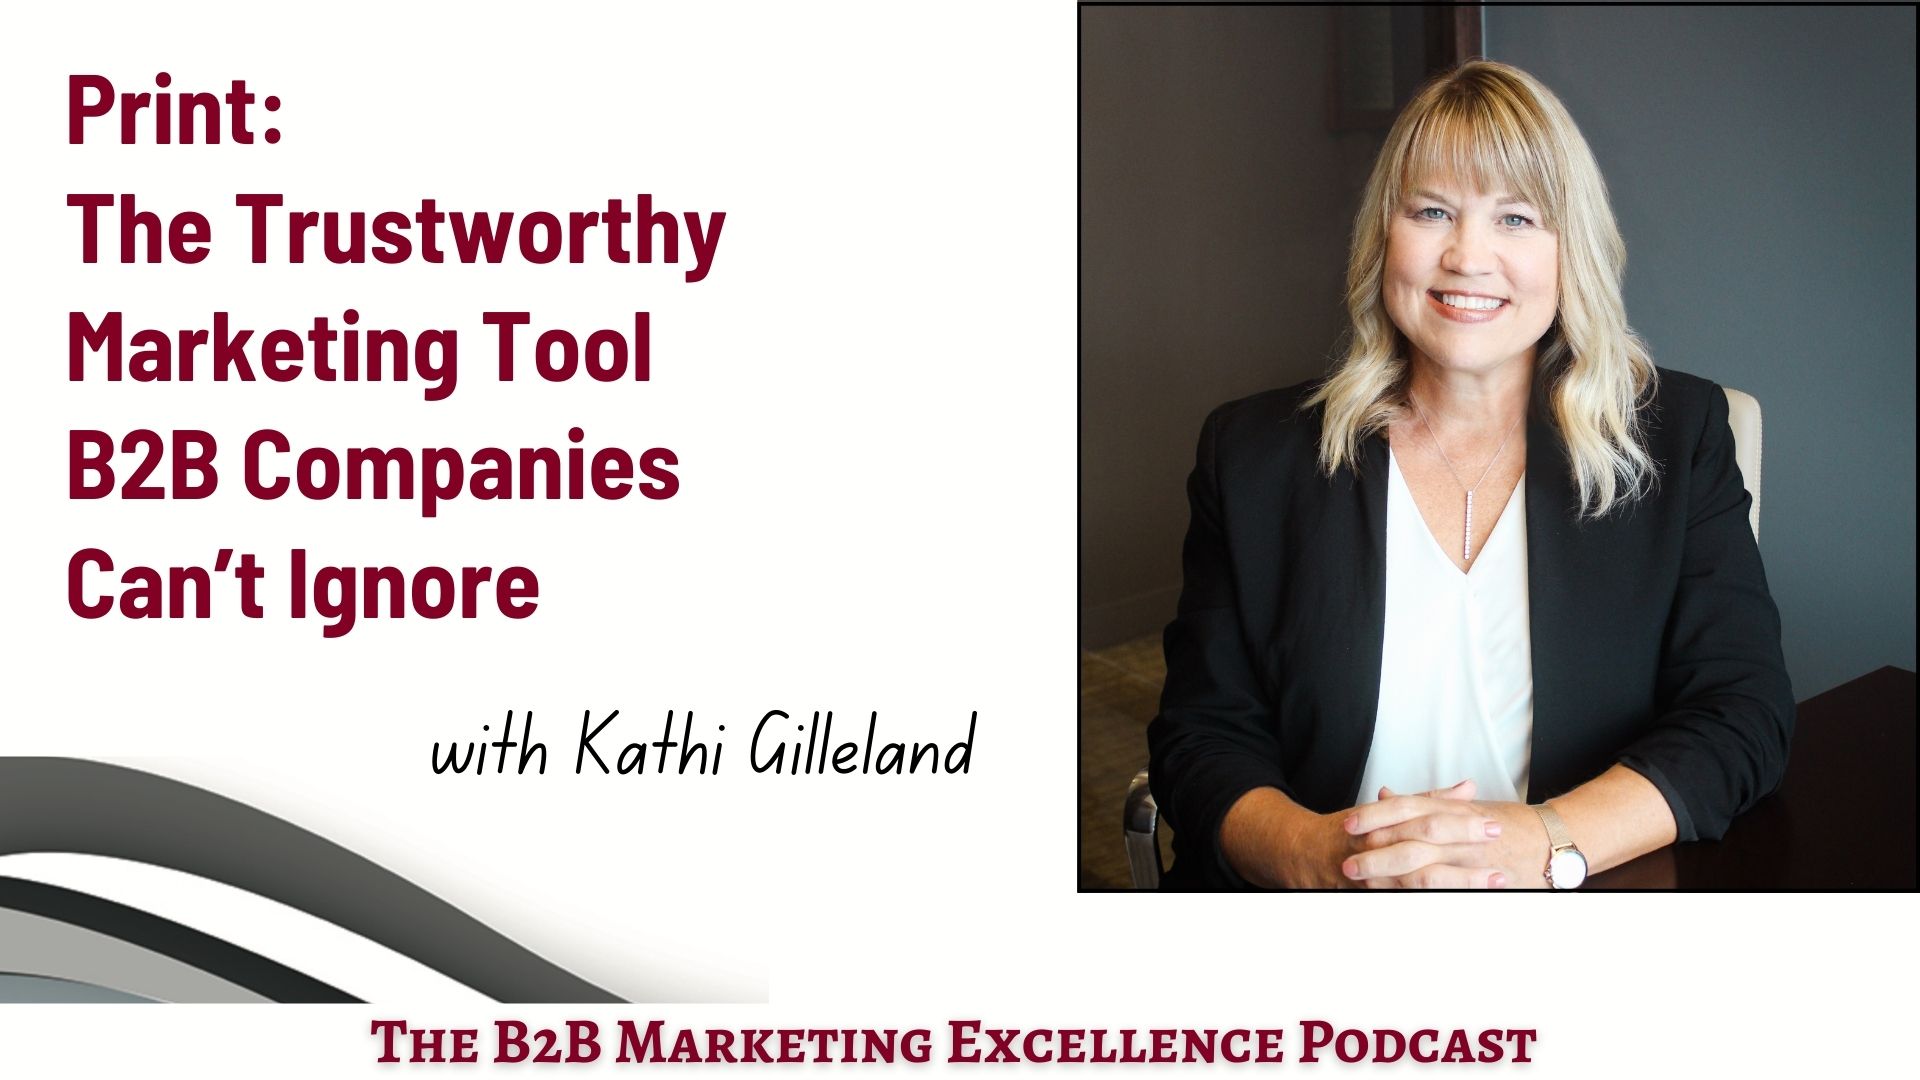 Print: The Trustworthy Marketing Tool B2B Companies Can’t Ignore